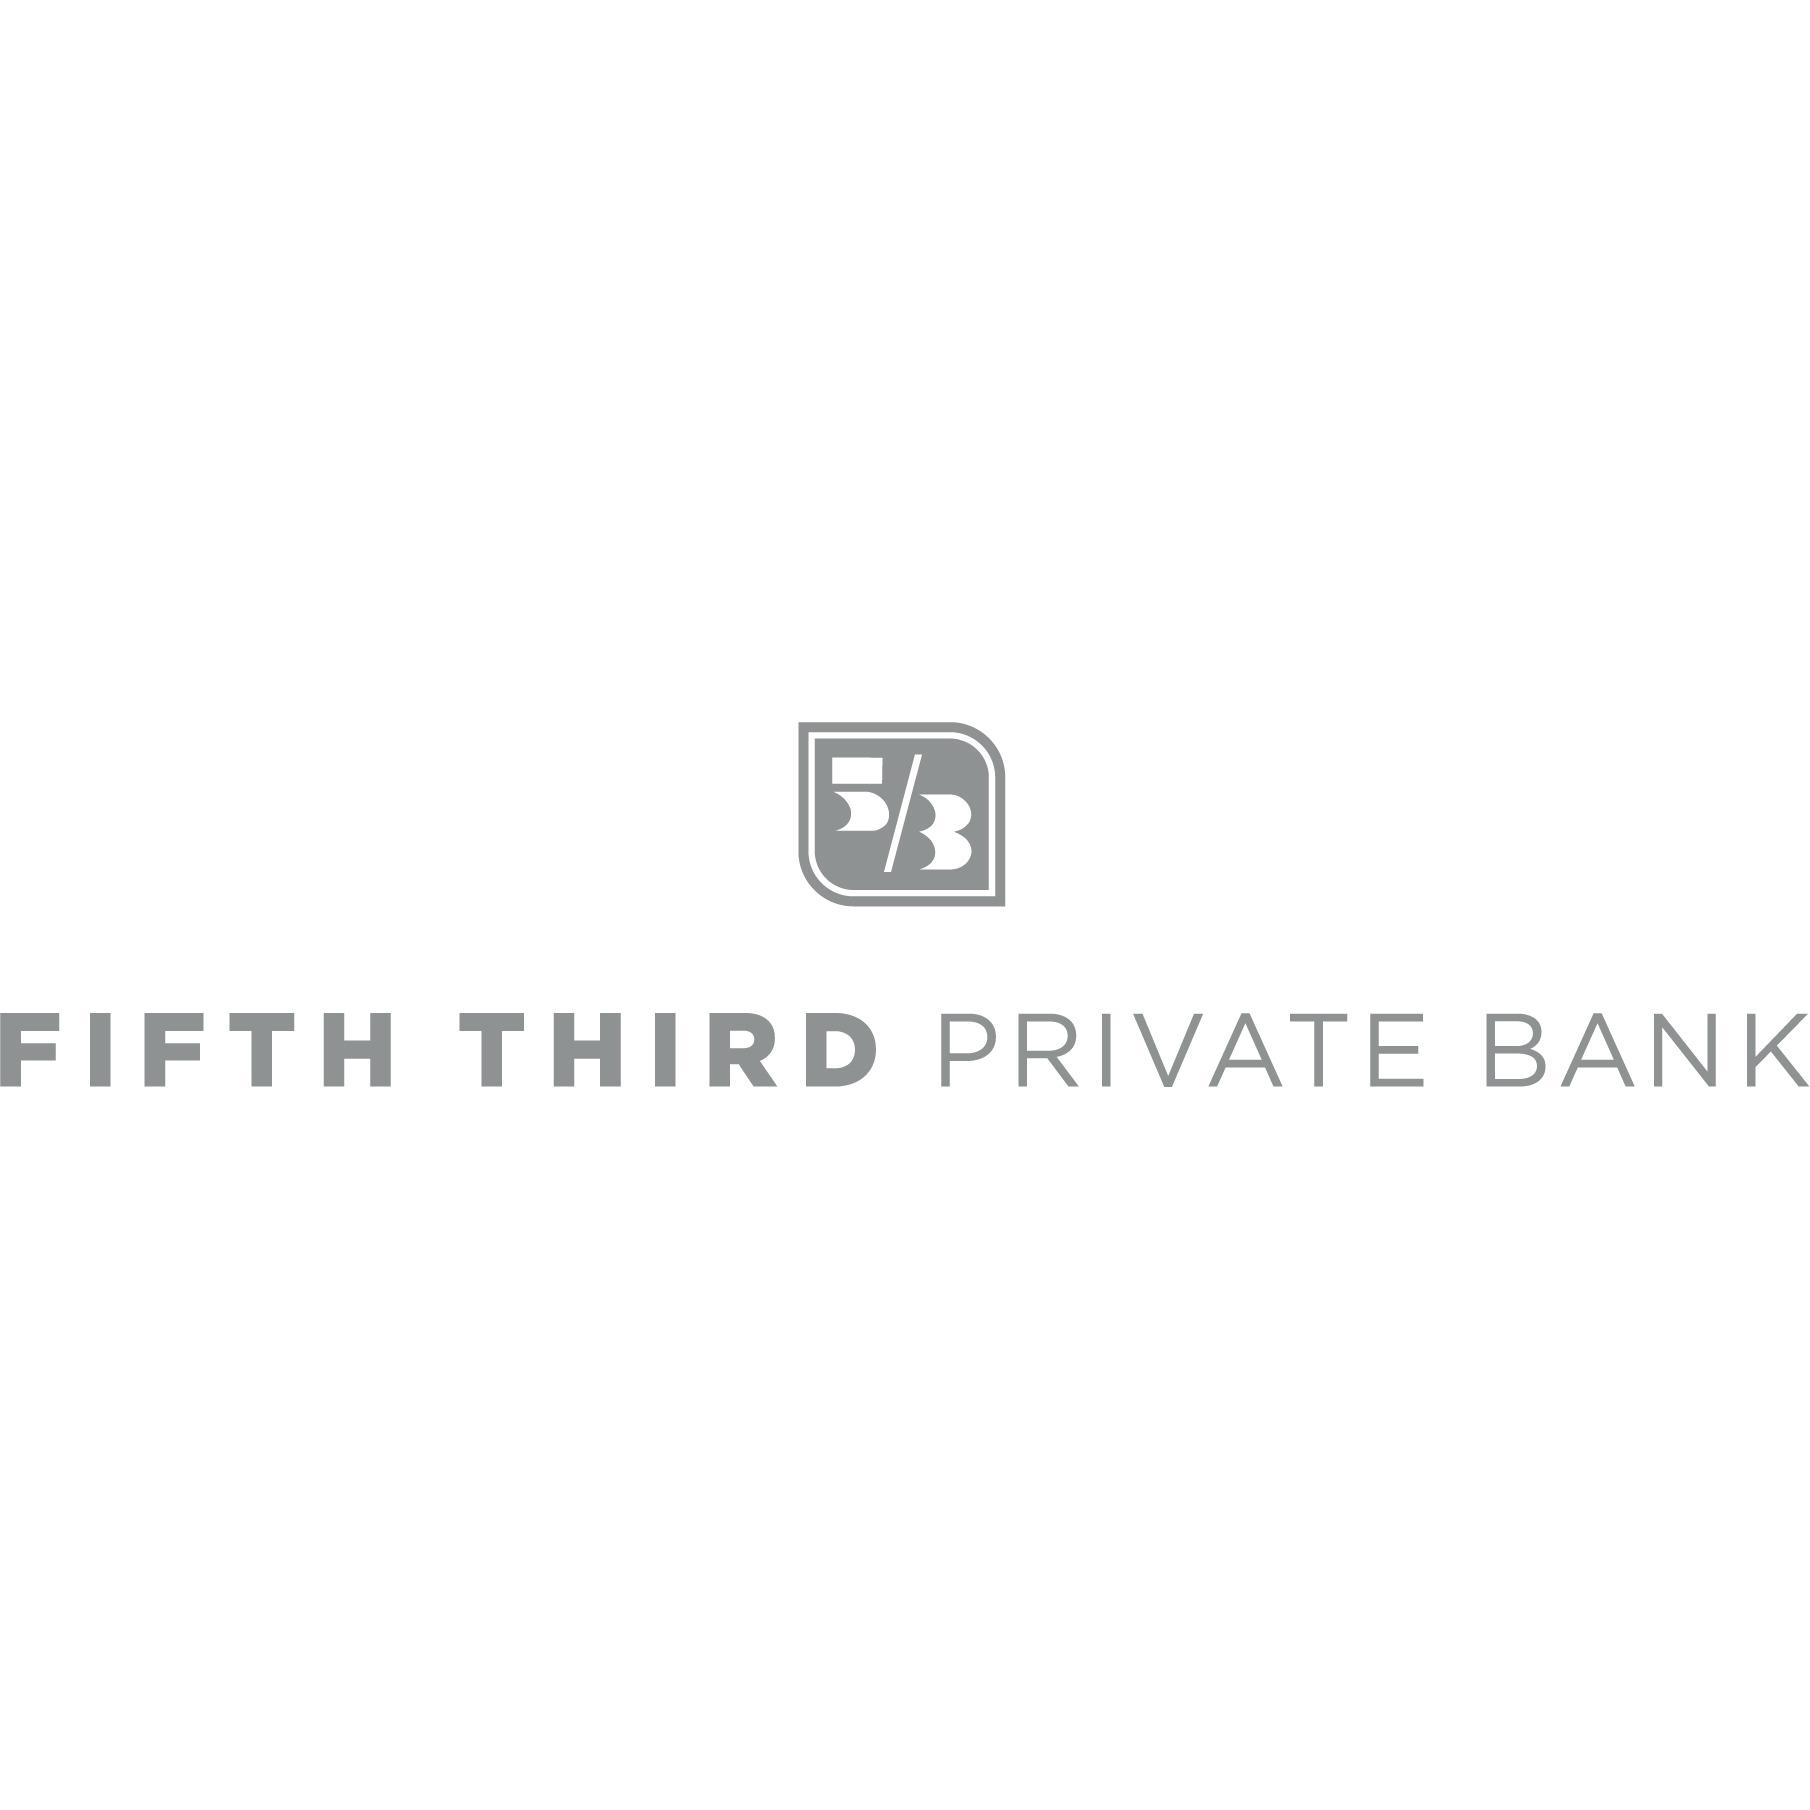 Fifth Third Private Bank - Lisa Kerr Photo